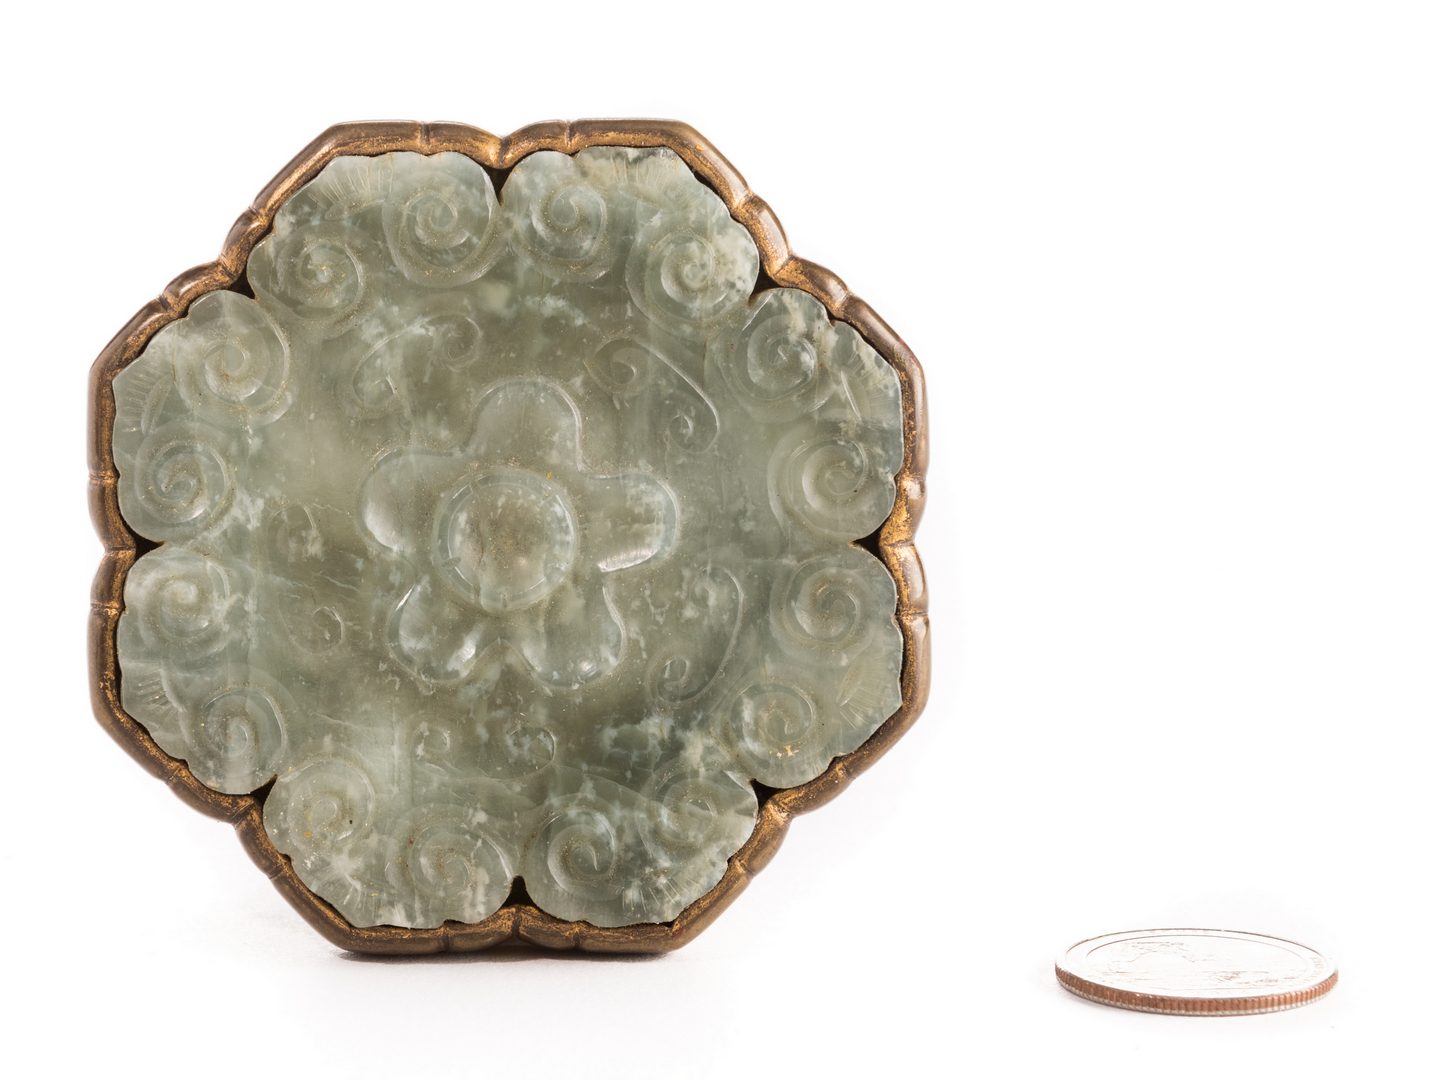 Lot 10: Chinese Jade and Gilt Brass Belt Ornament